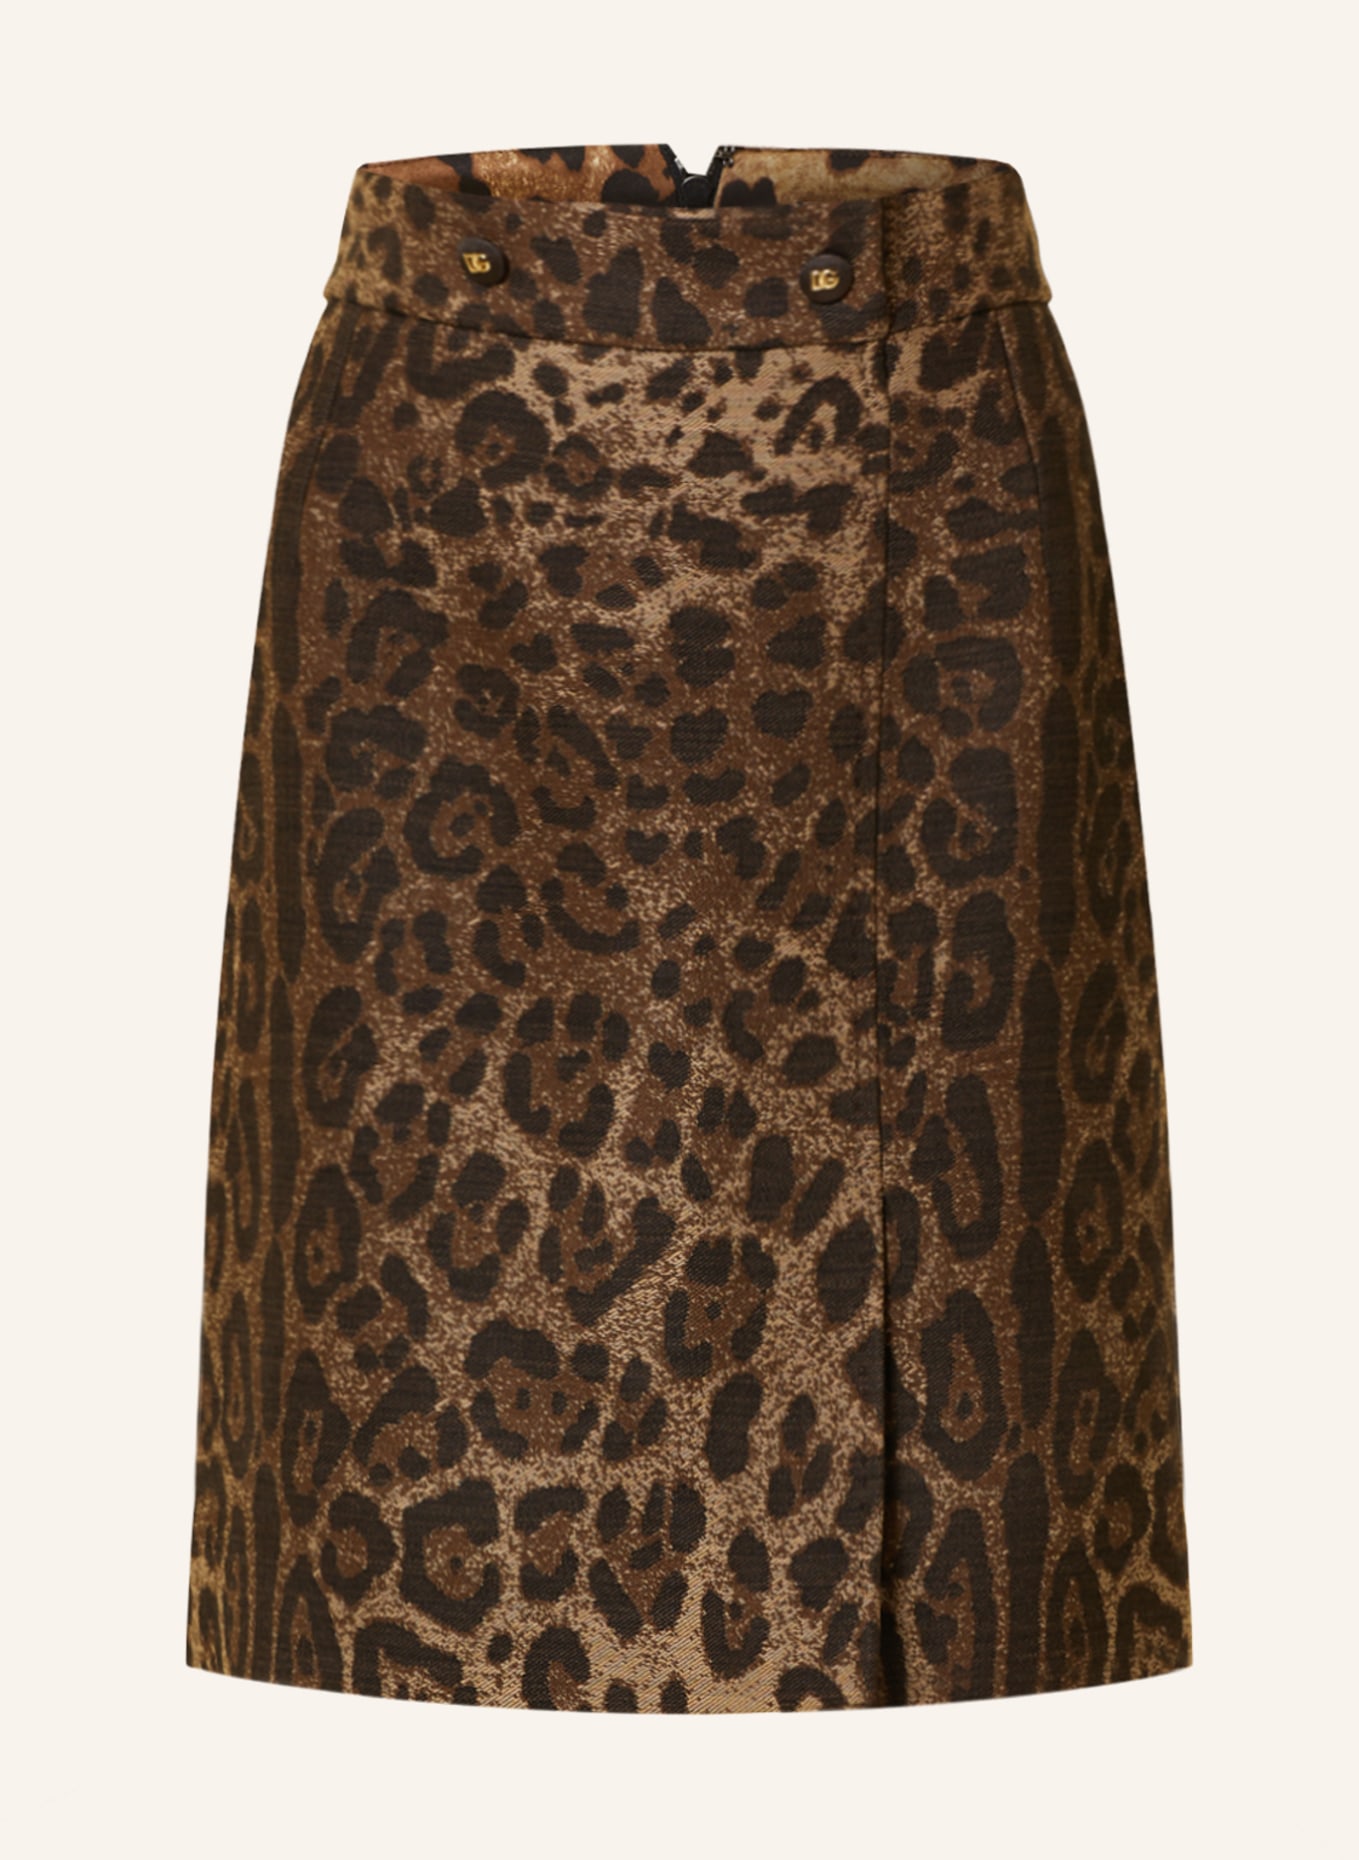 DOLCE & GABBANA Jacquard skirt, Color: BROWN/ DARK BROWN/ LIGHT BROWN (Image 1)